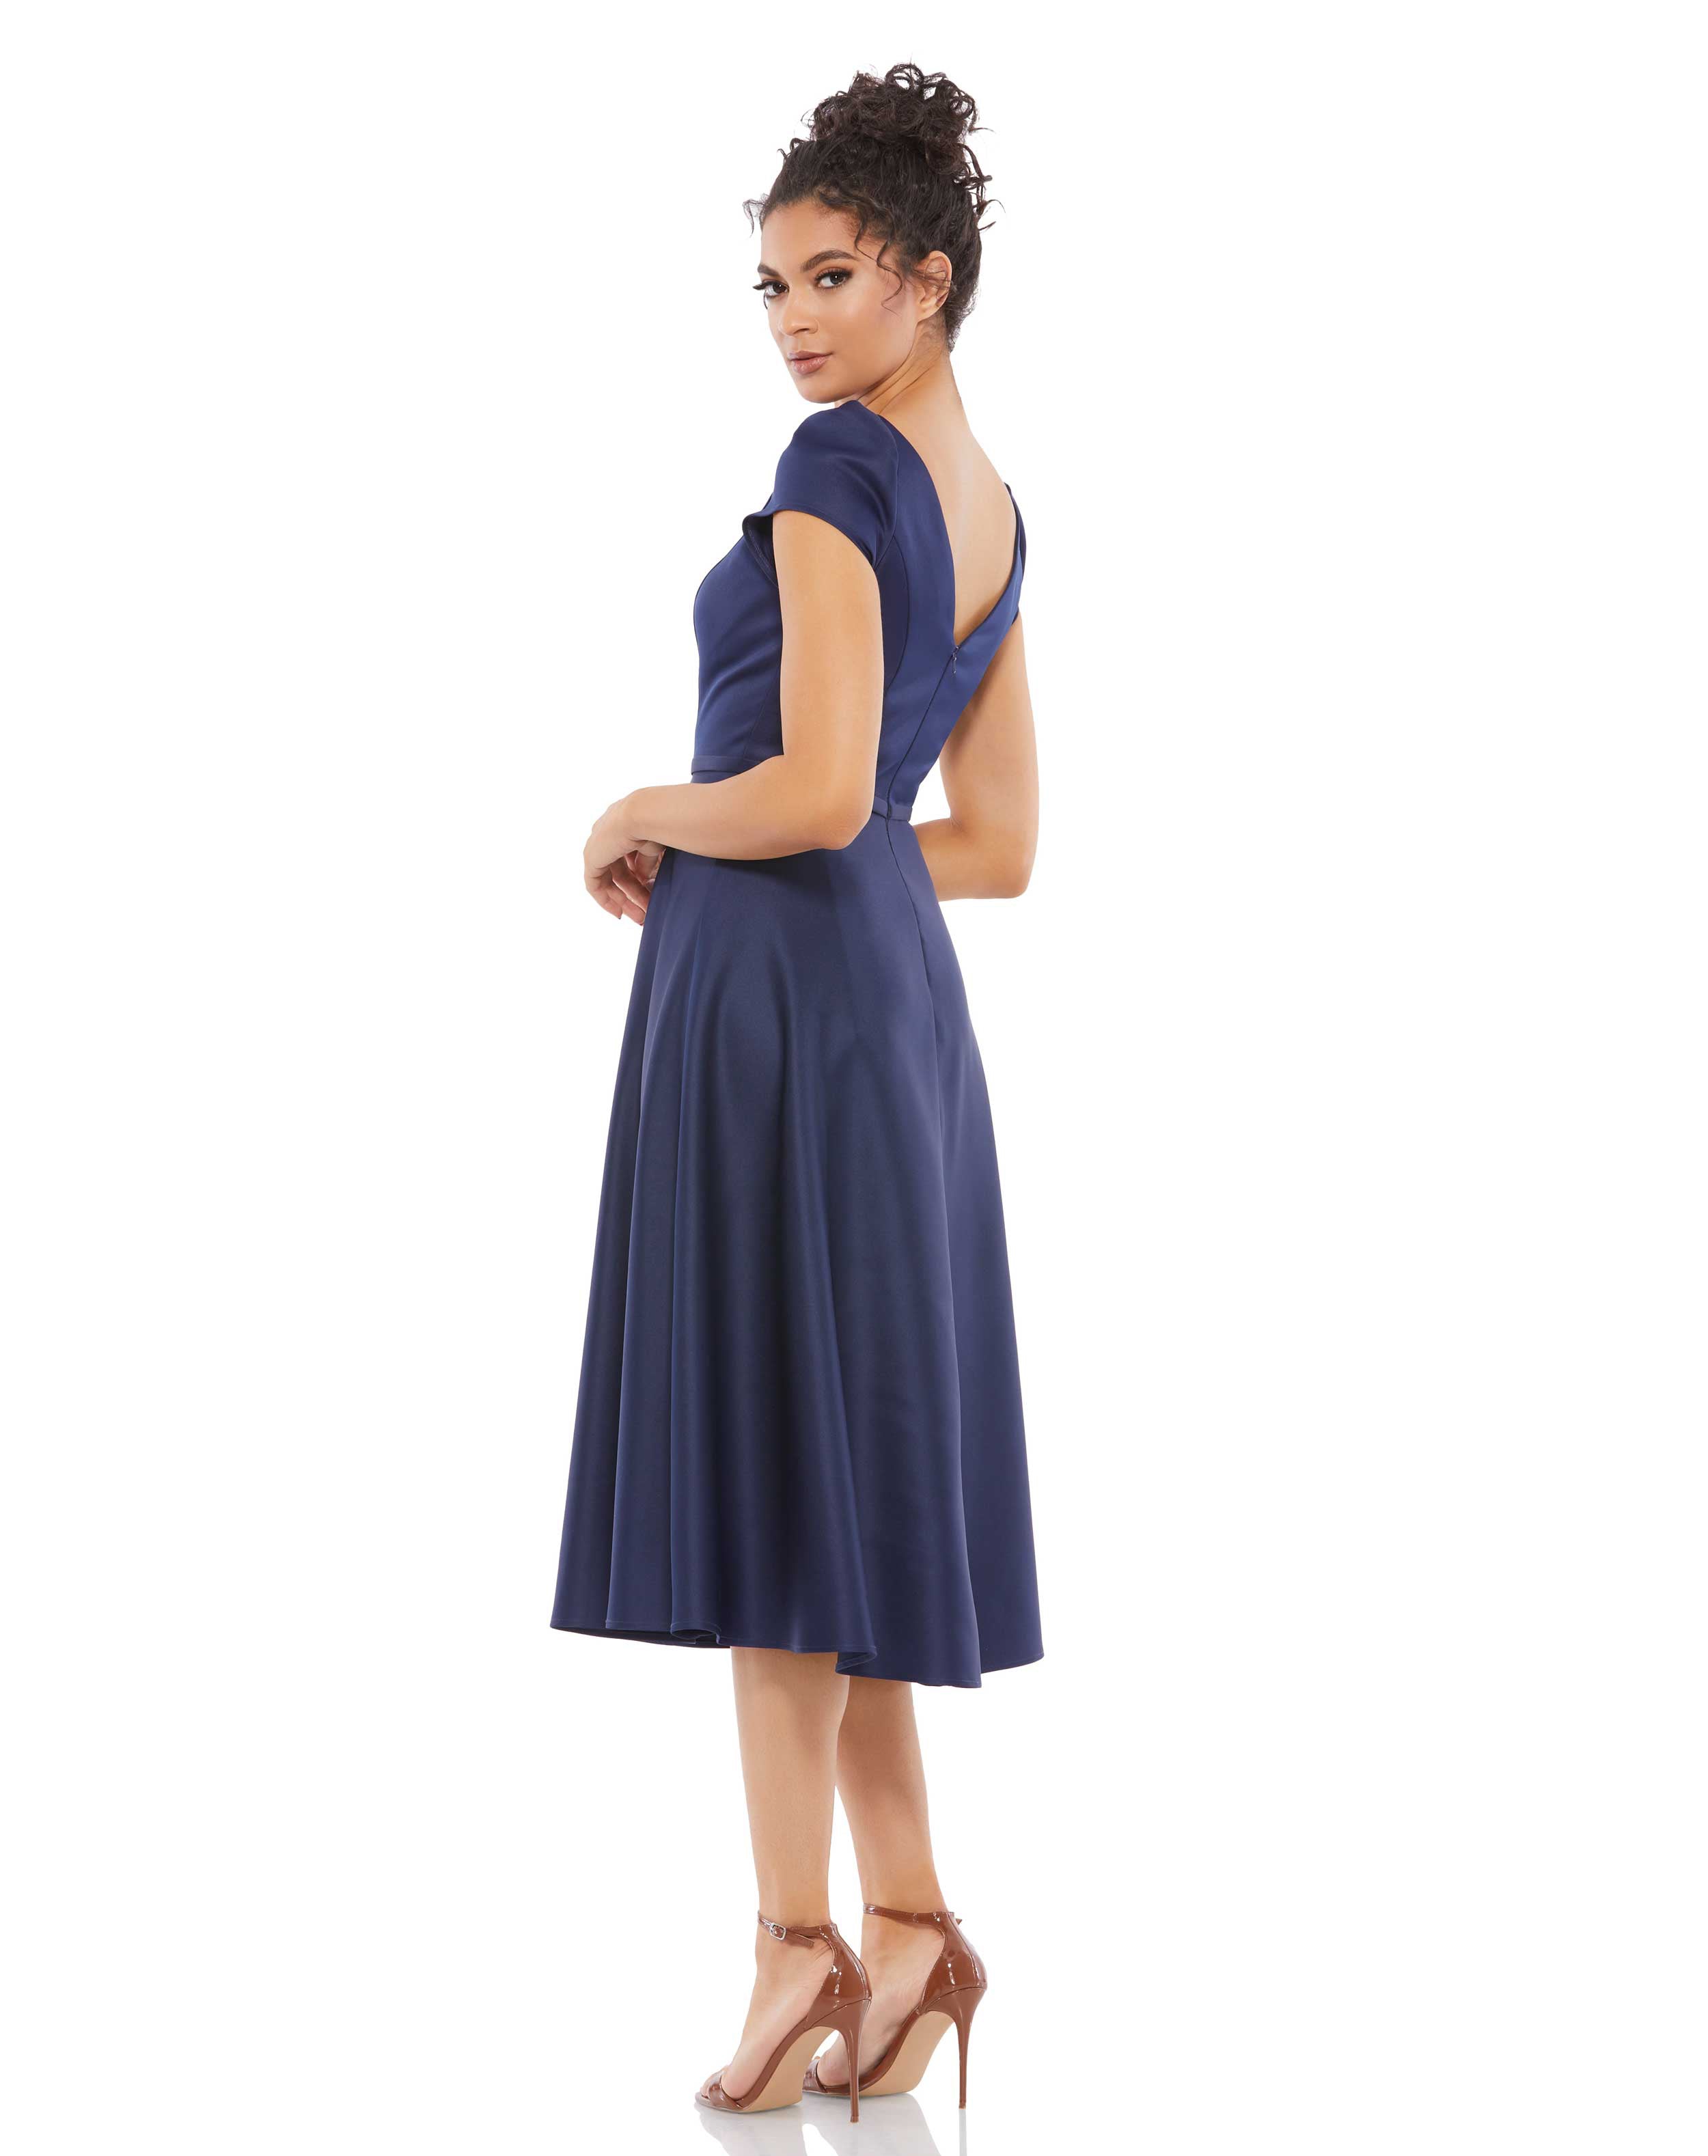 Satin Puff Shoulder Tea Length Dress